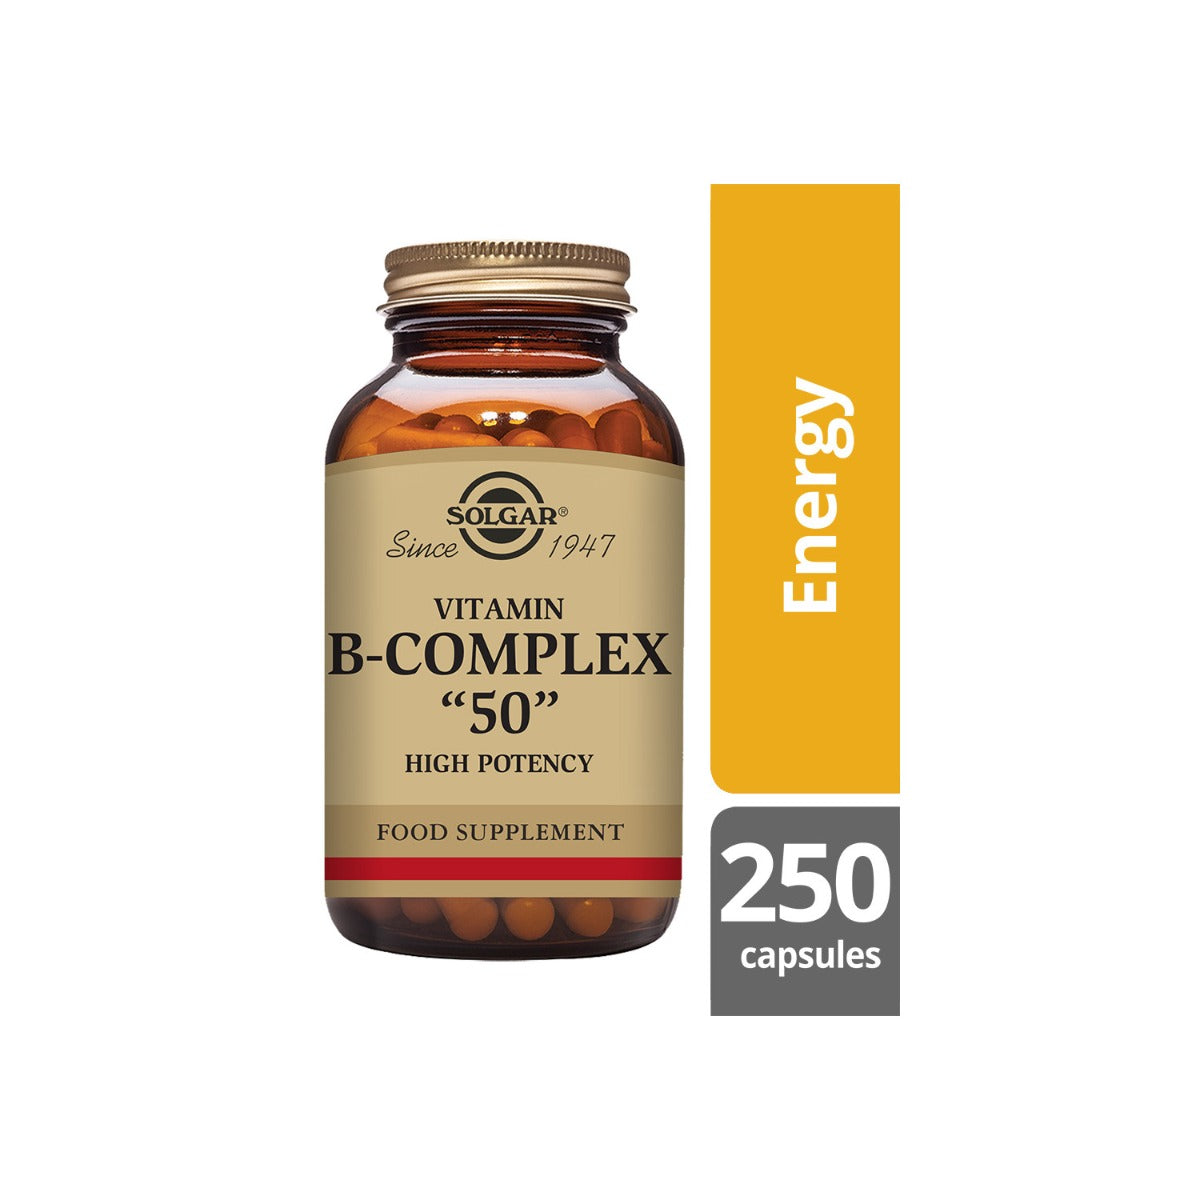 Solgar® Vitamin B-Complex ''50'' High Potency Vegetable Capsules - 250 Packs